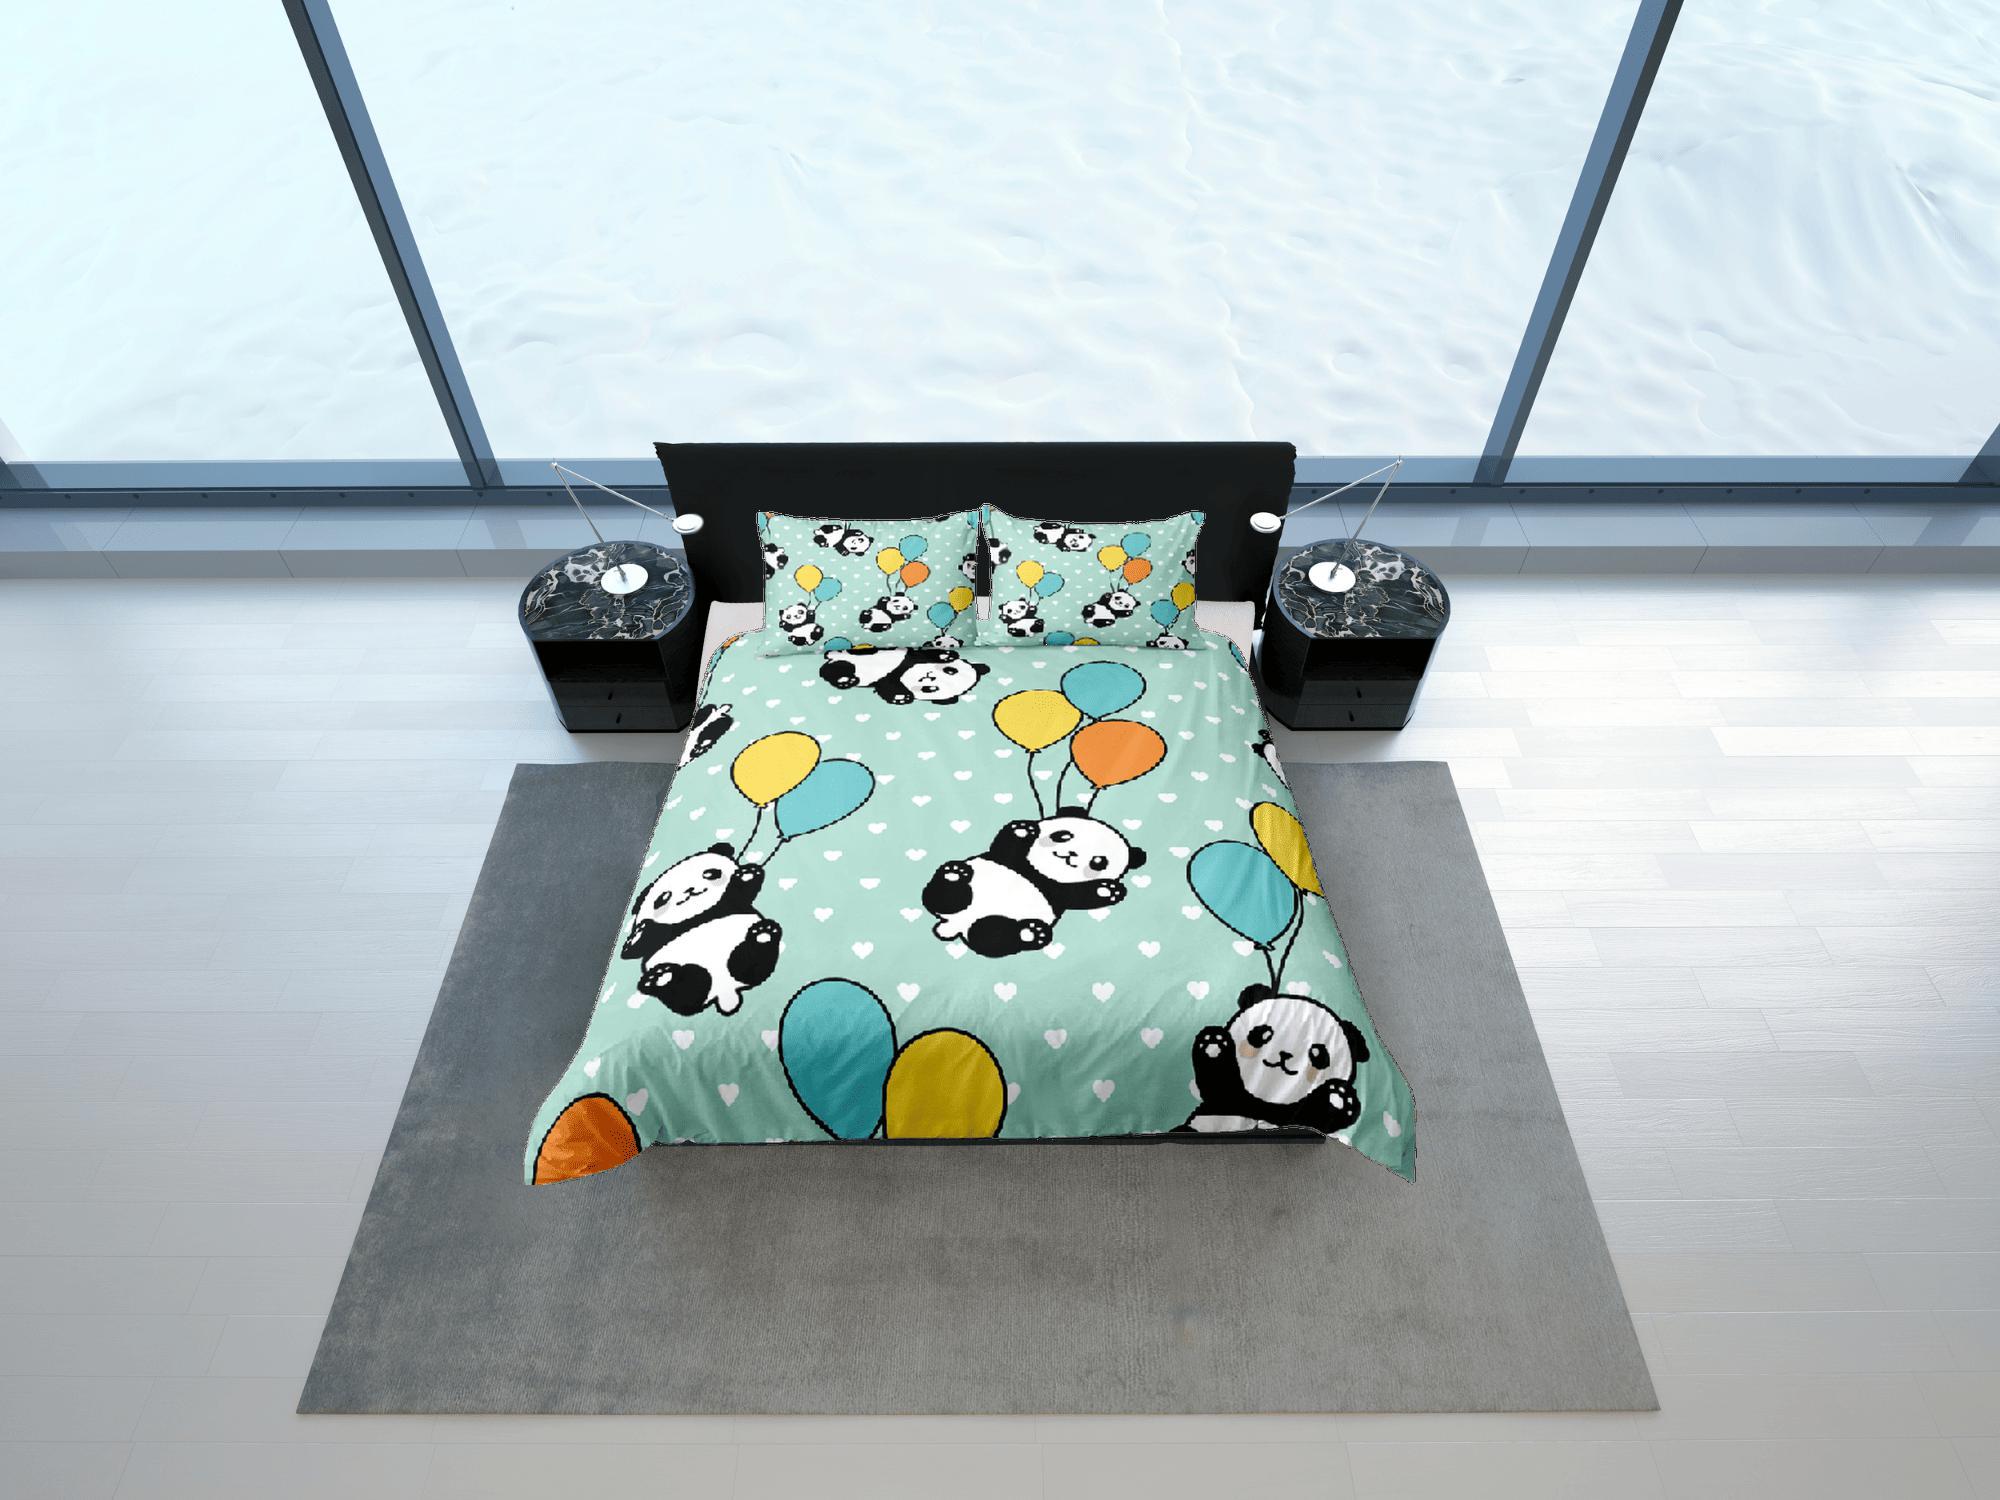 daintyduvet Gift for Panda Lovers Duvet Cover Set Bedspread, Kids Bedding with Pillowcase